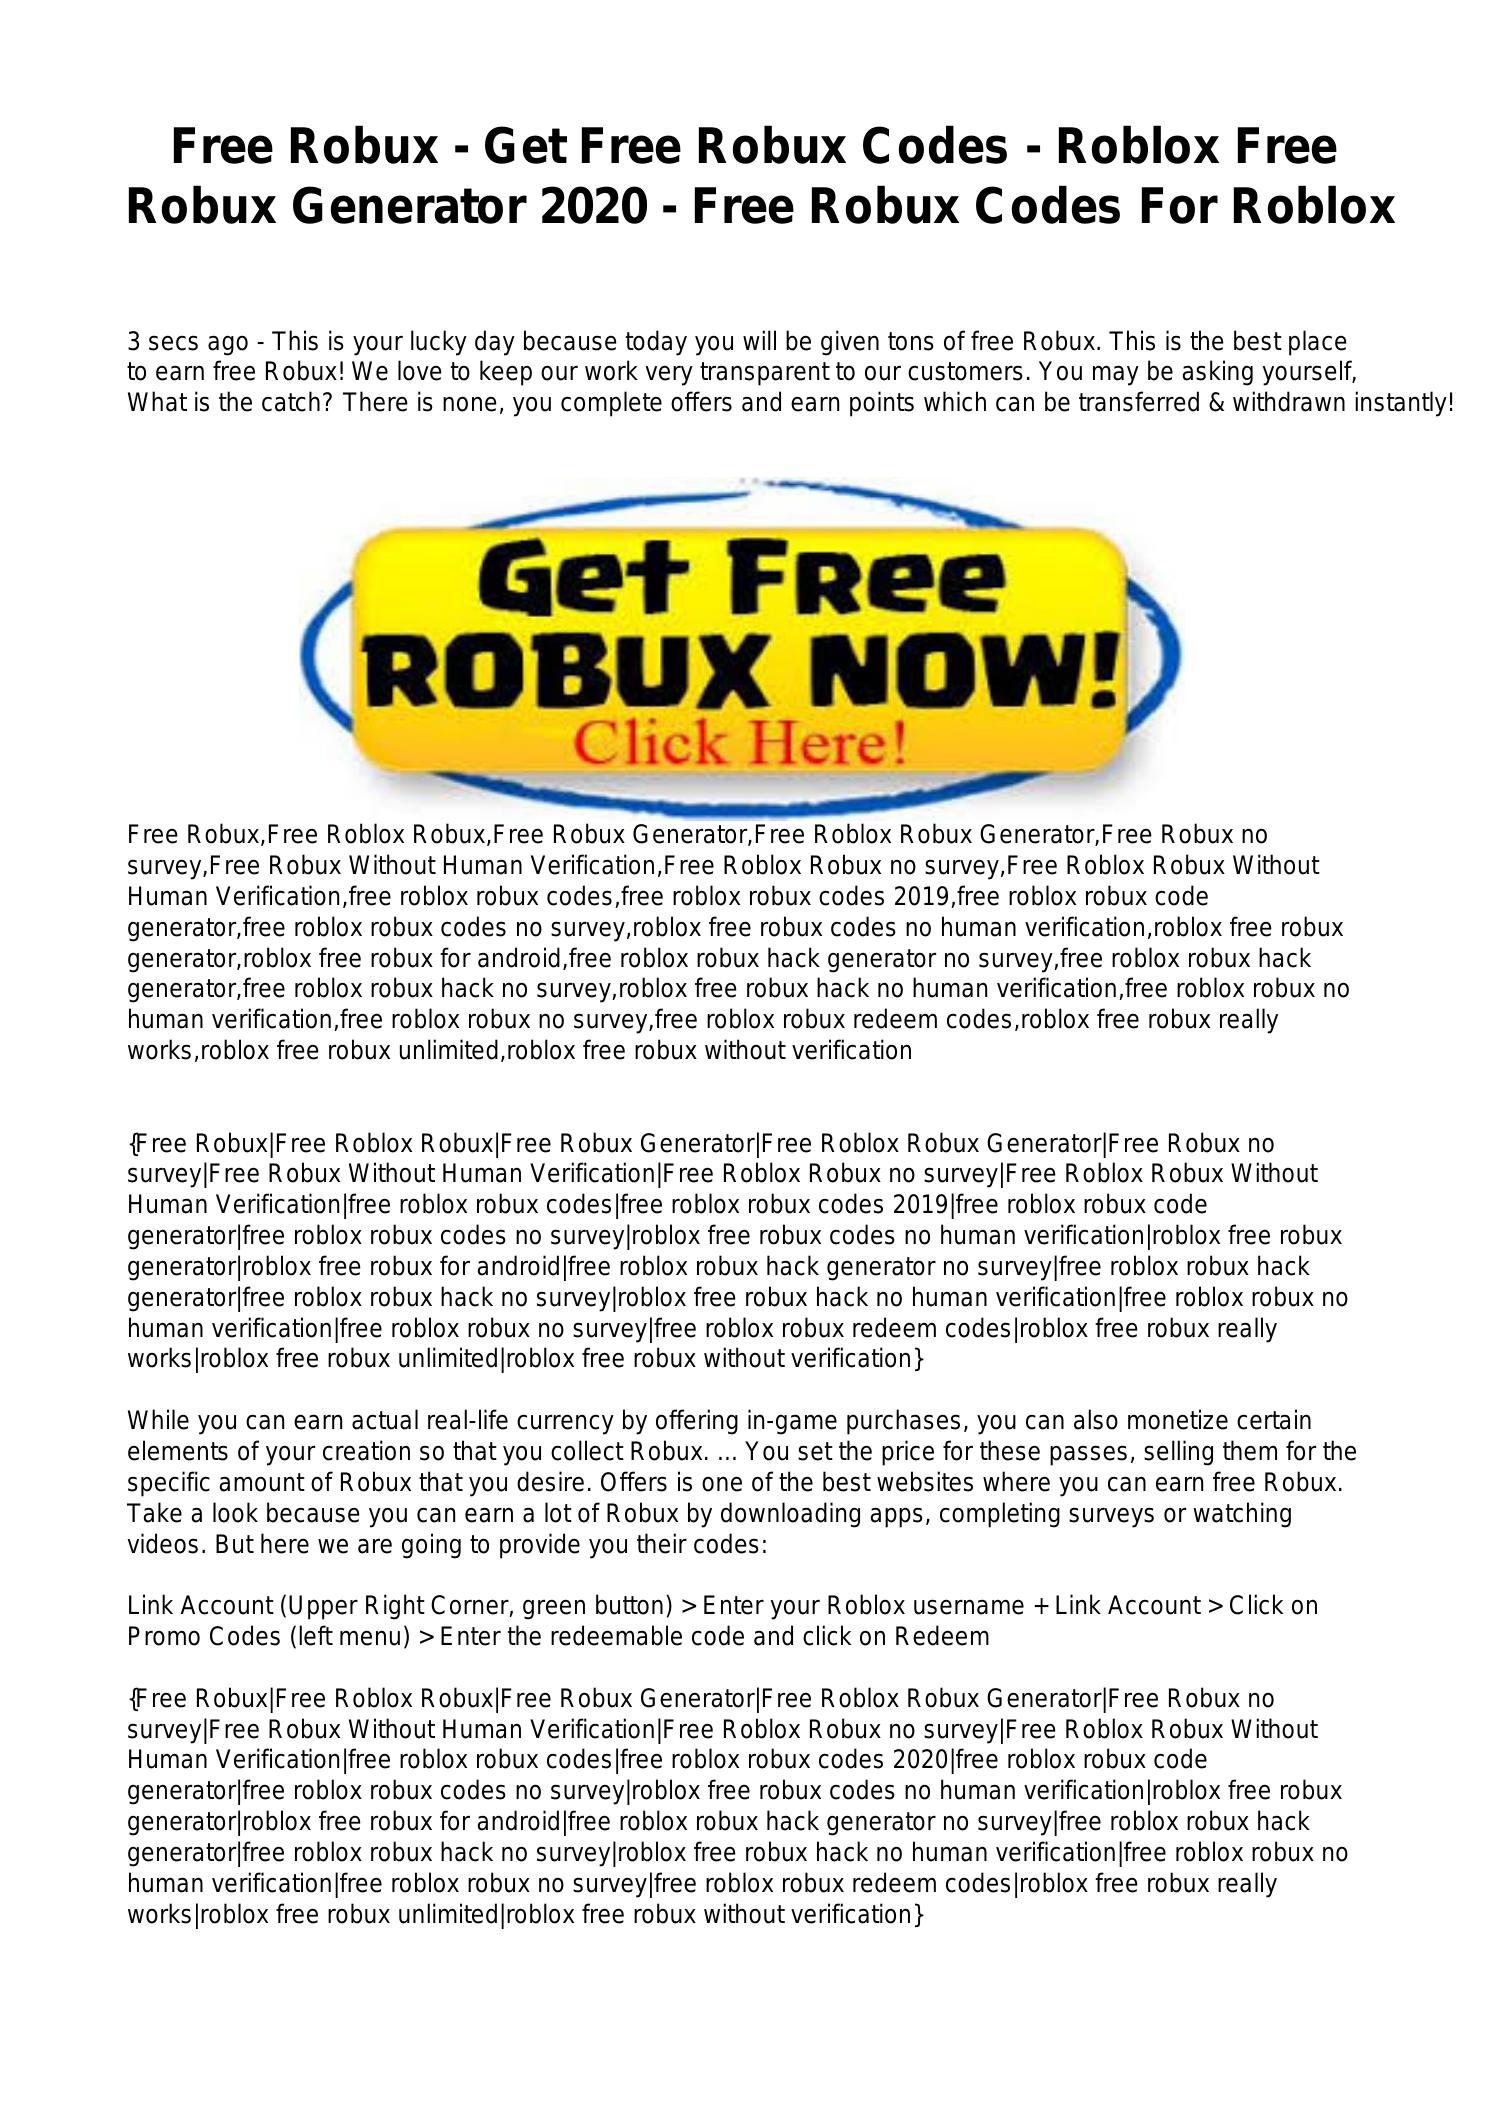 Free Robux Get Free Robux Codes Roblox Free Robux Generator 2020 Free Robux Codes For Roblox Pdf Docdroid